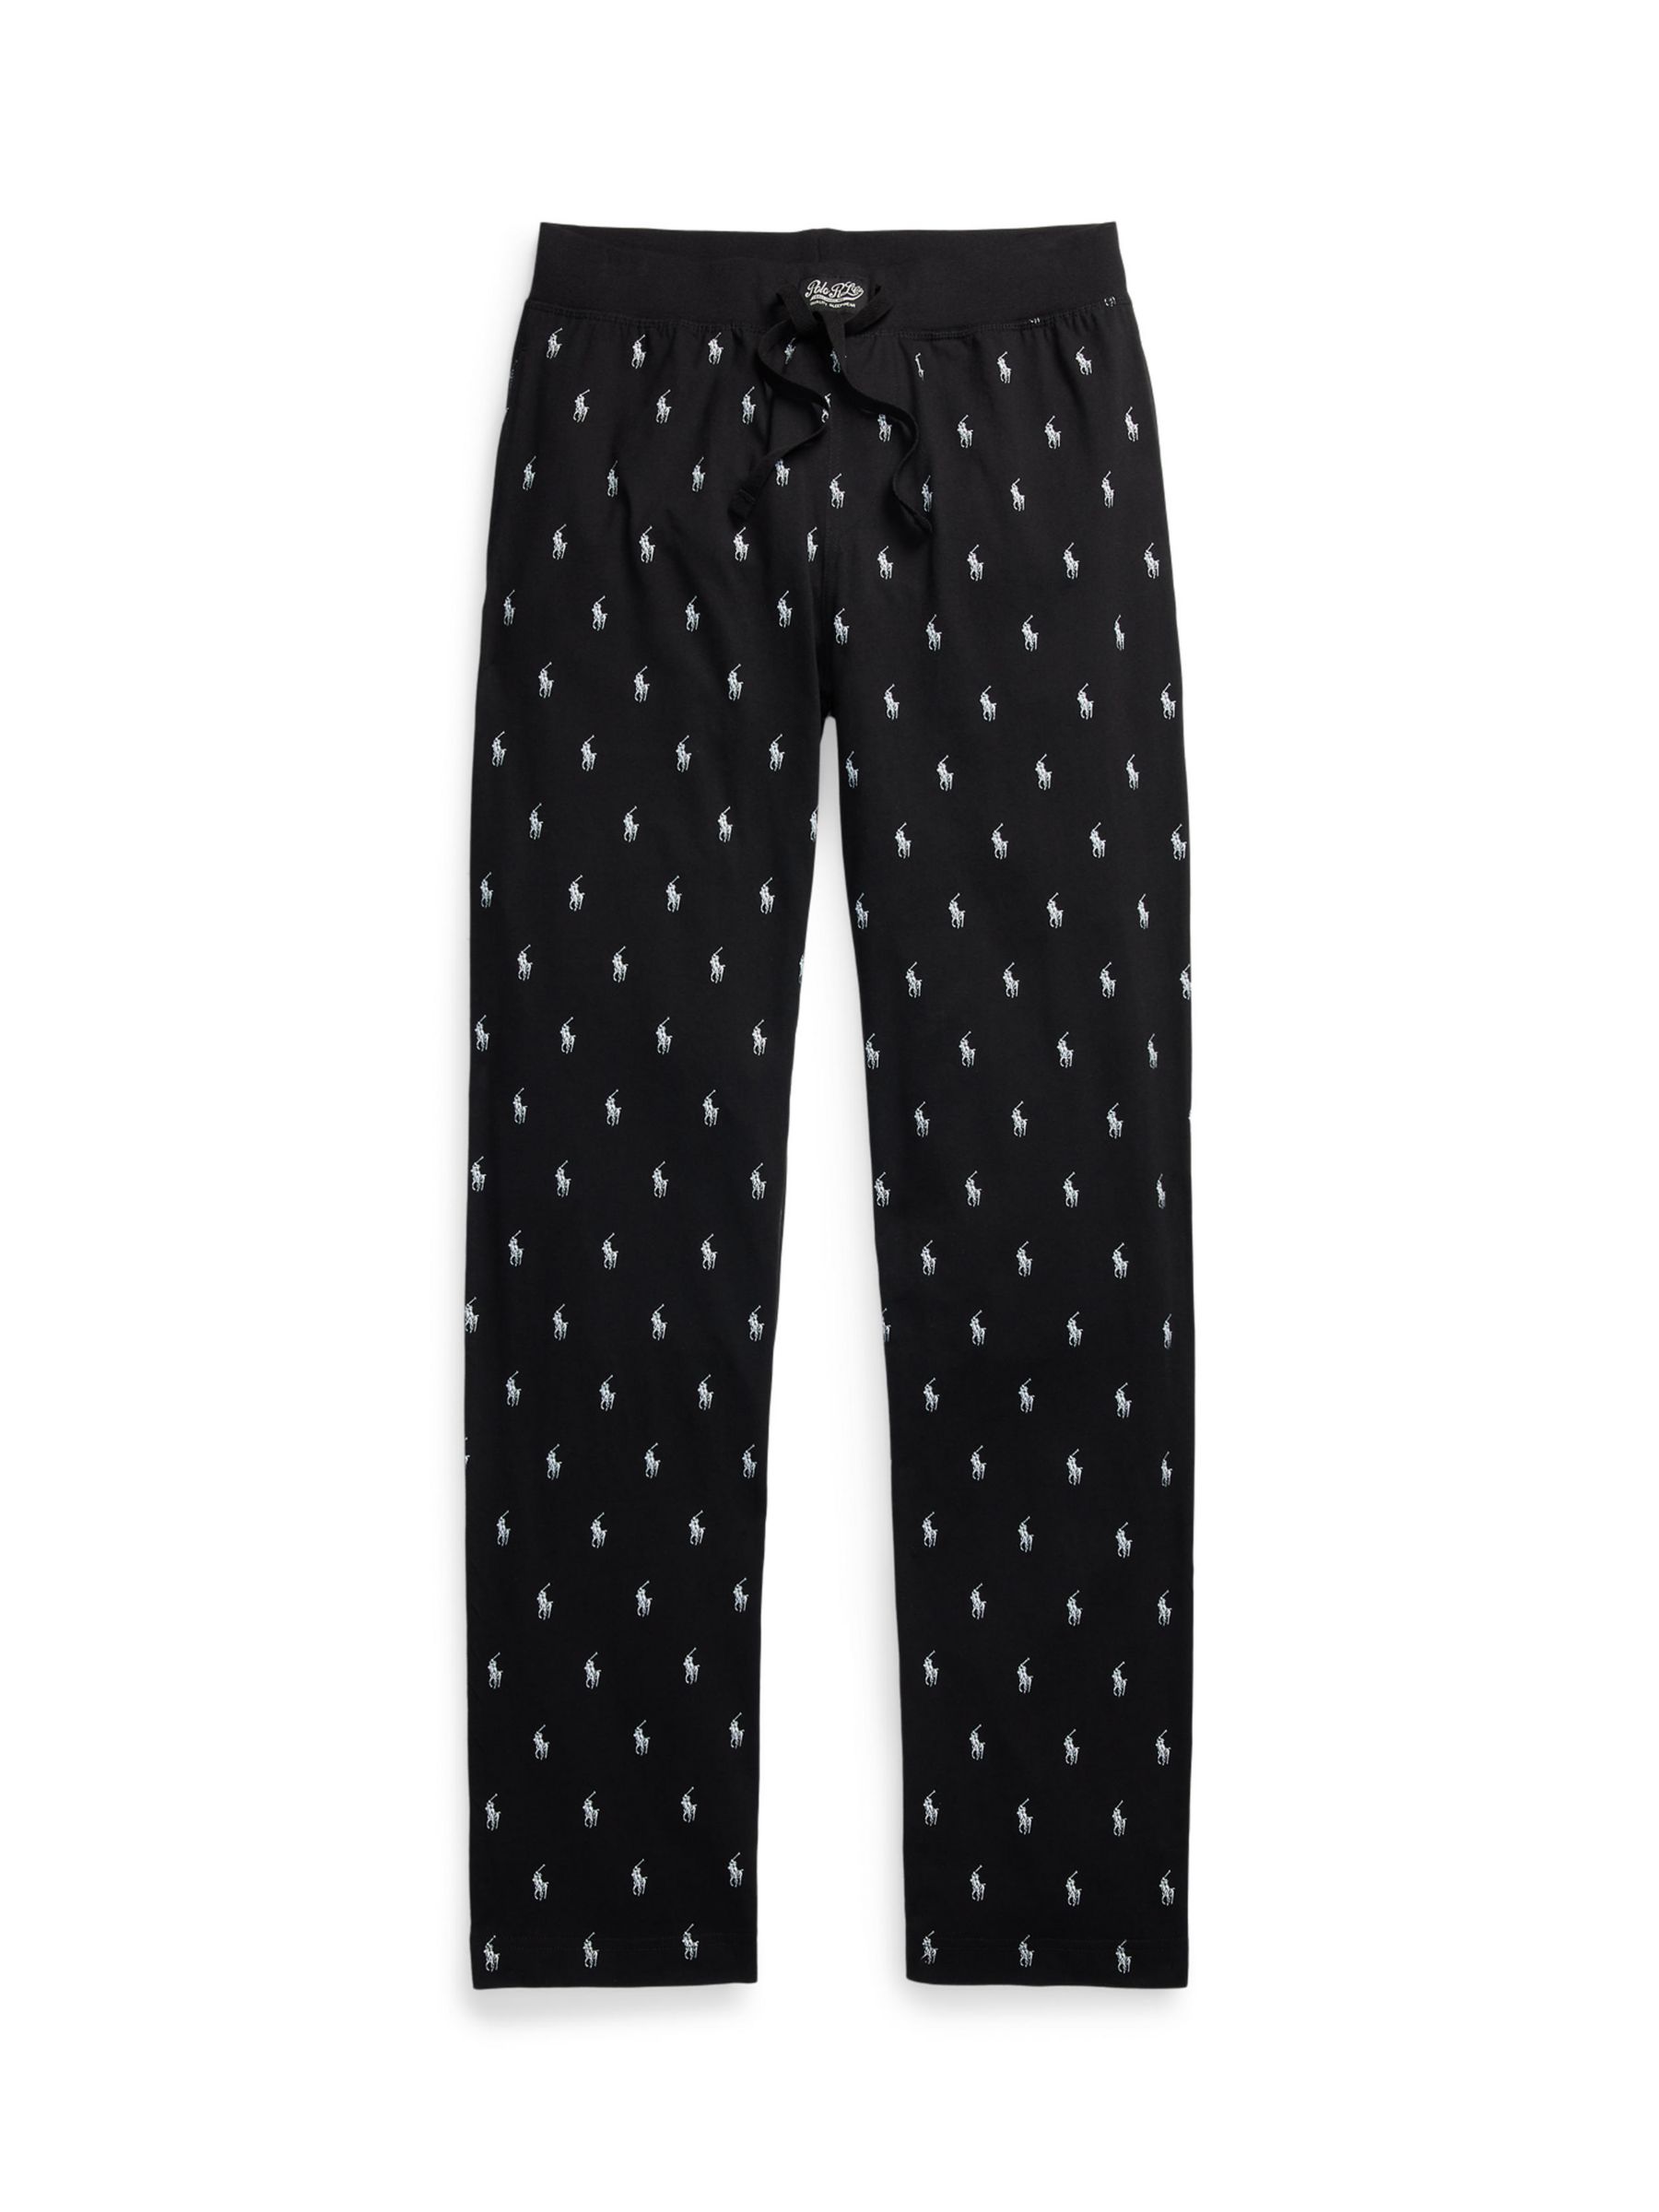 Ralph Lauren Signature Pony Jersey Lounge Pants, Black/White, XL